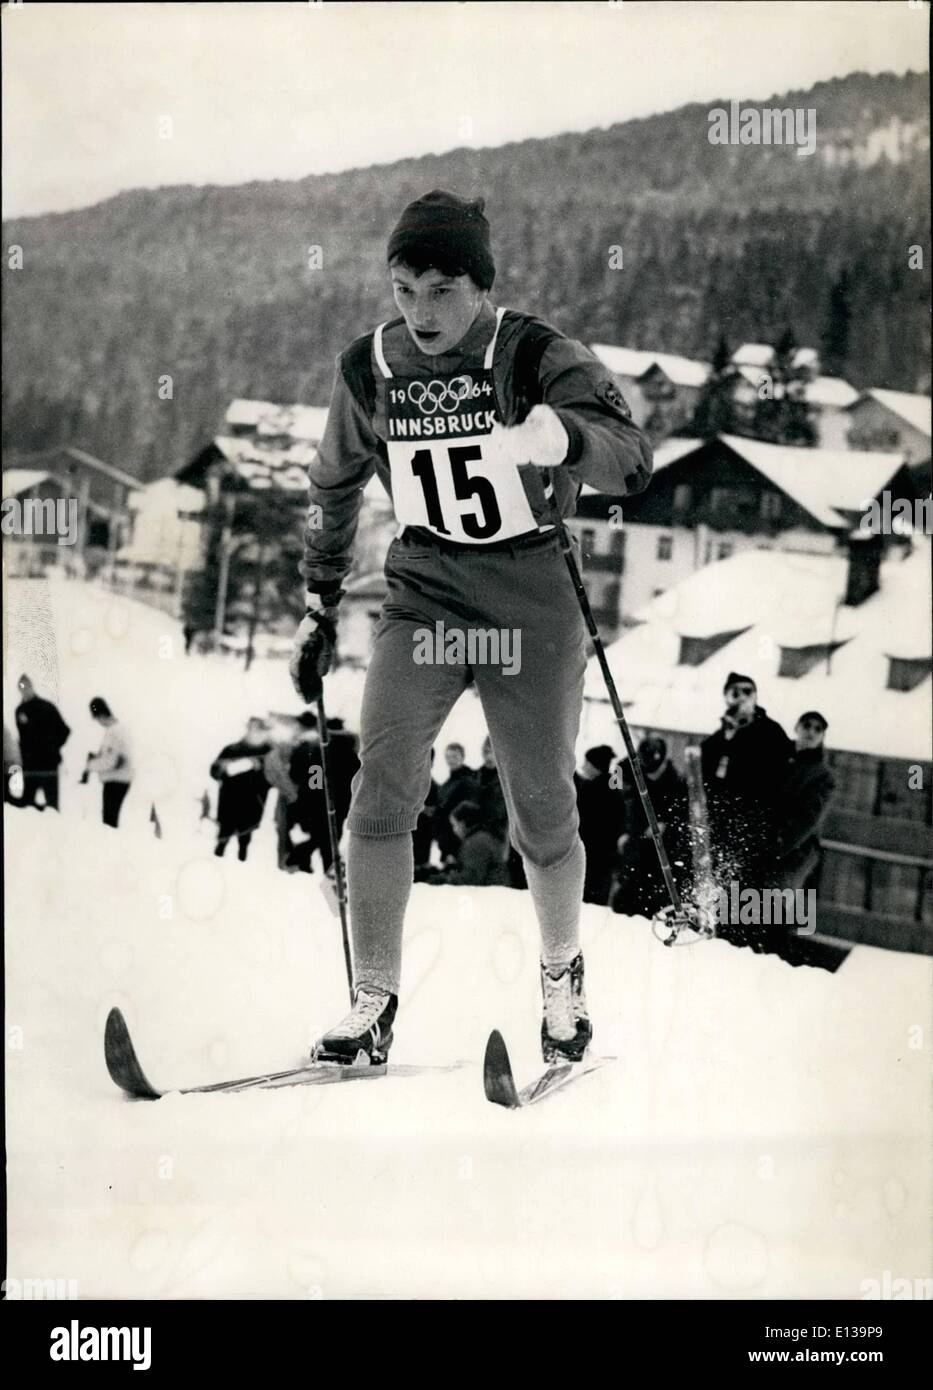 29 février 2012 - Jeux Olympiques d'hiver 1964 Innsbruck : Siegerin im 10-km-ski, Klawdija Bojardkich Damen der UDSSR médaille d'or, 10 km ski de fond. Banque D'Images